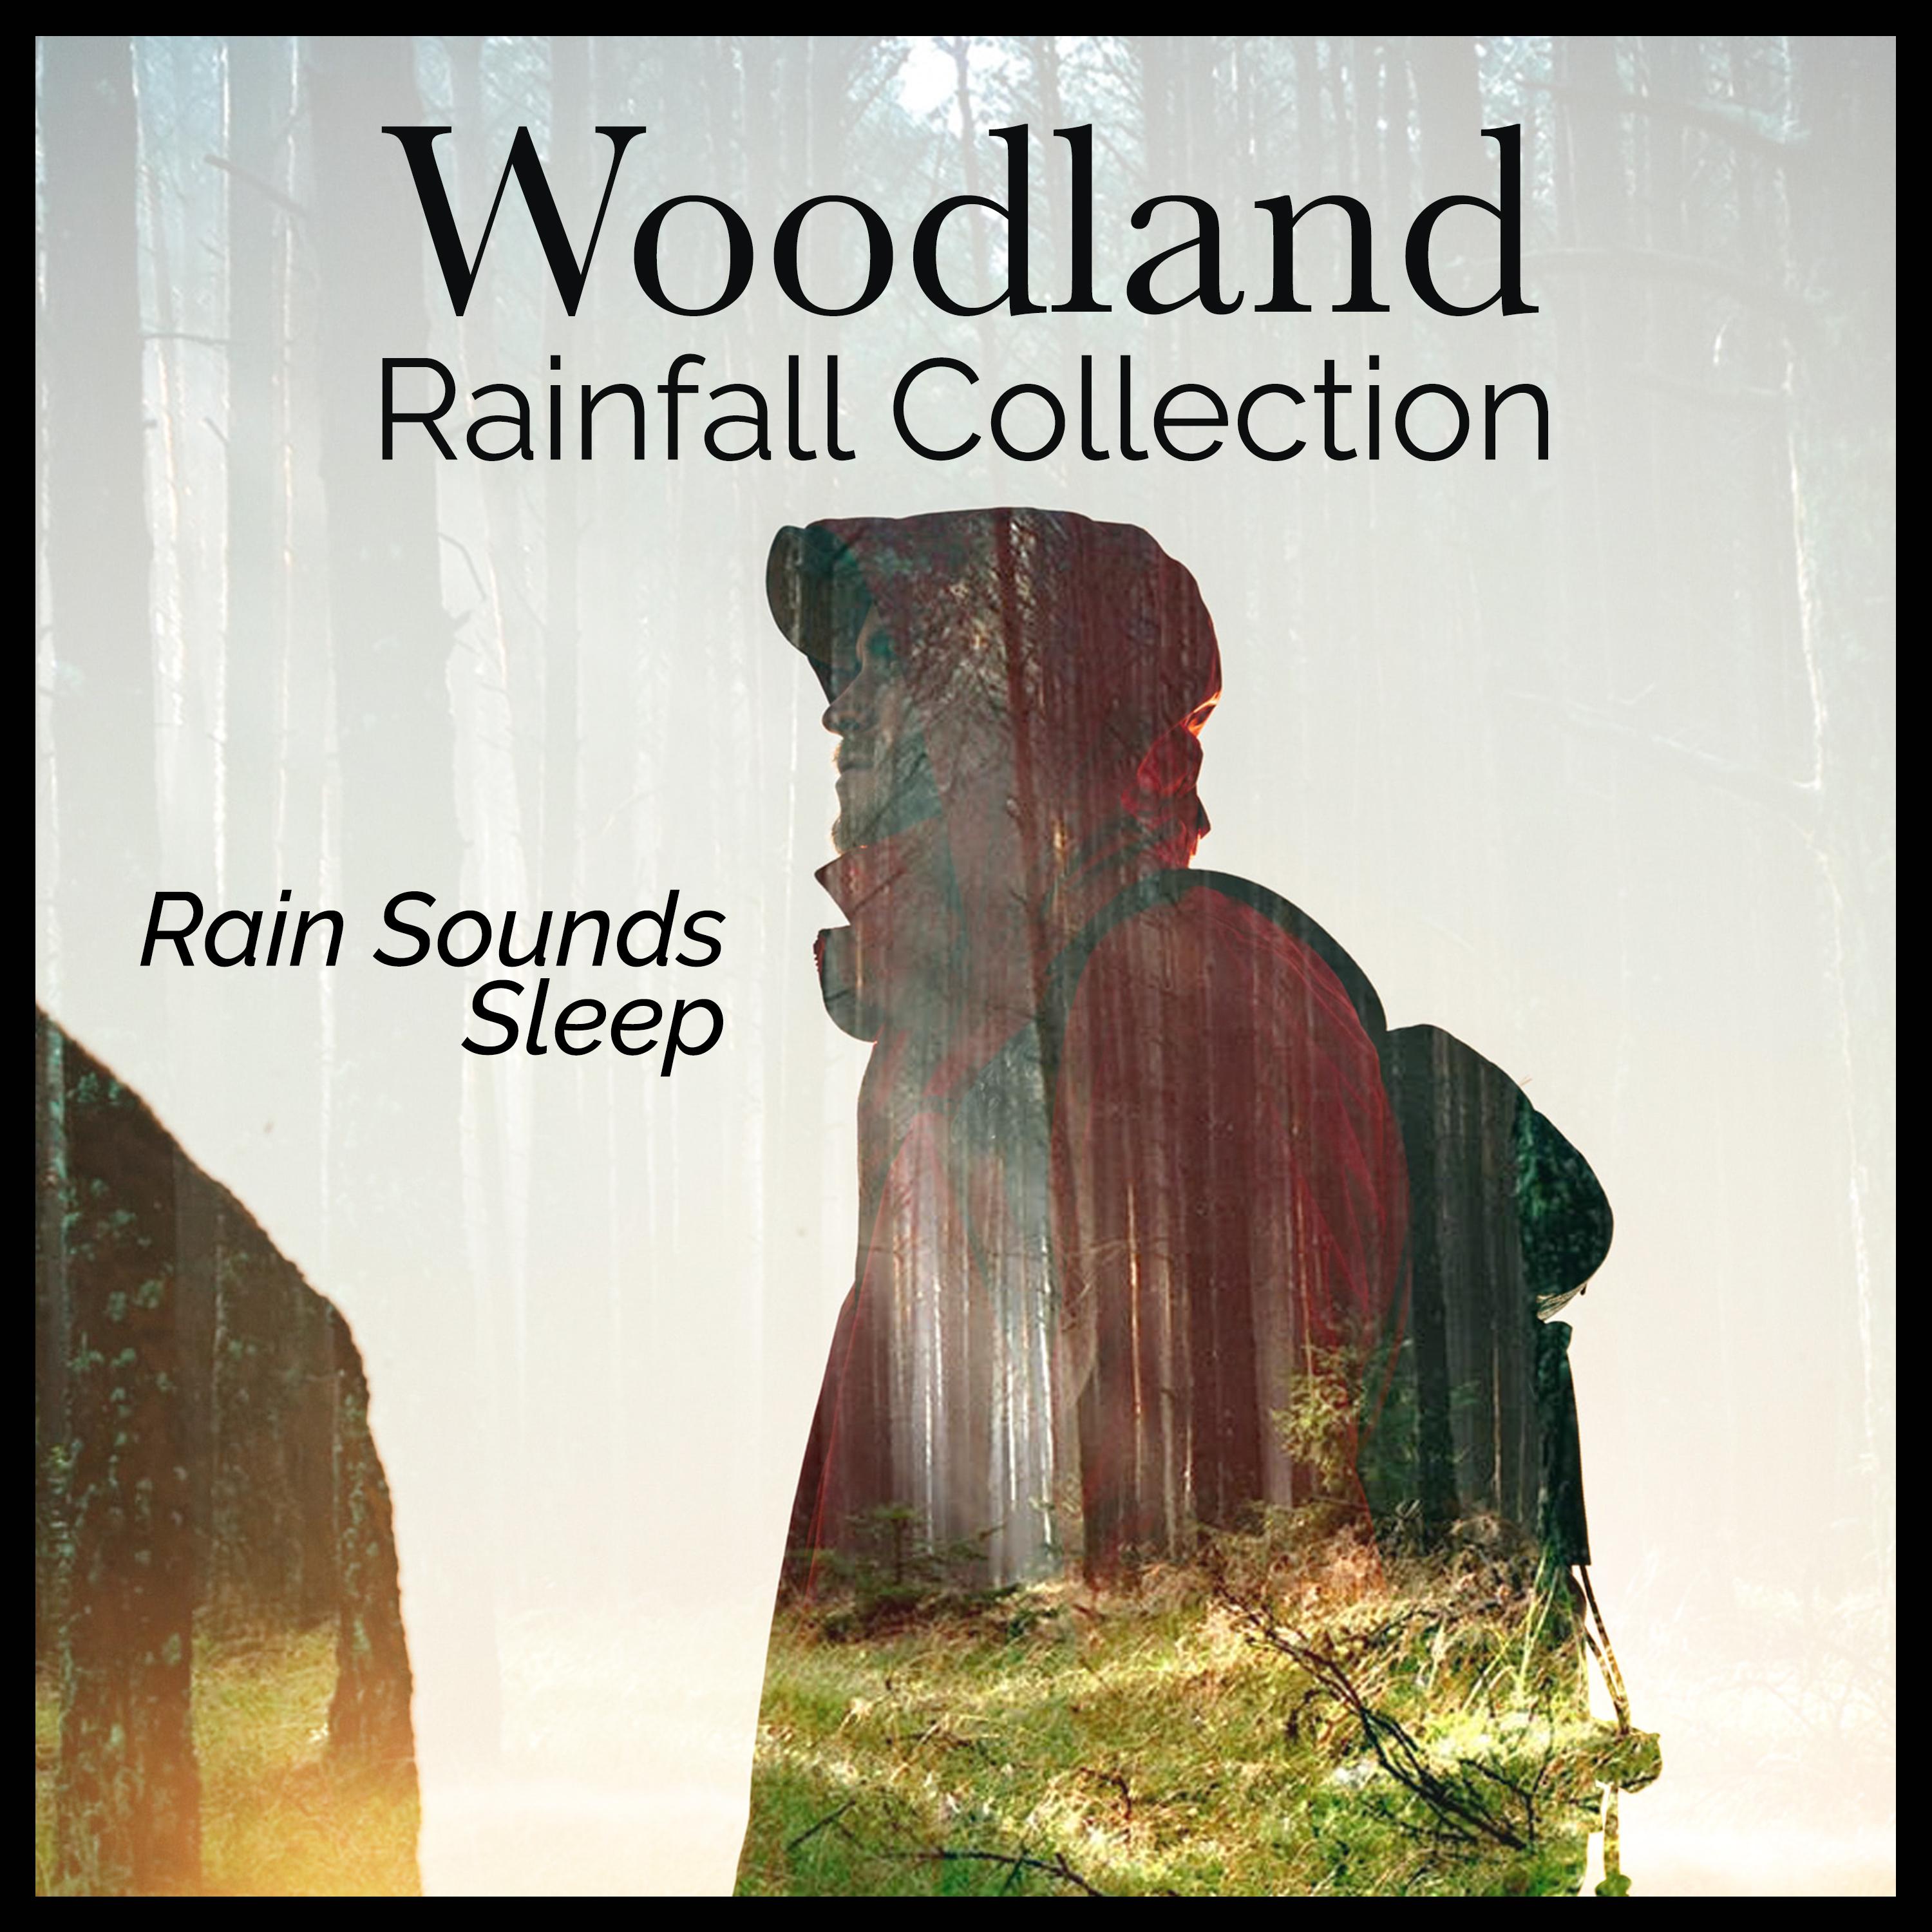 Woodland Rainfall Collection